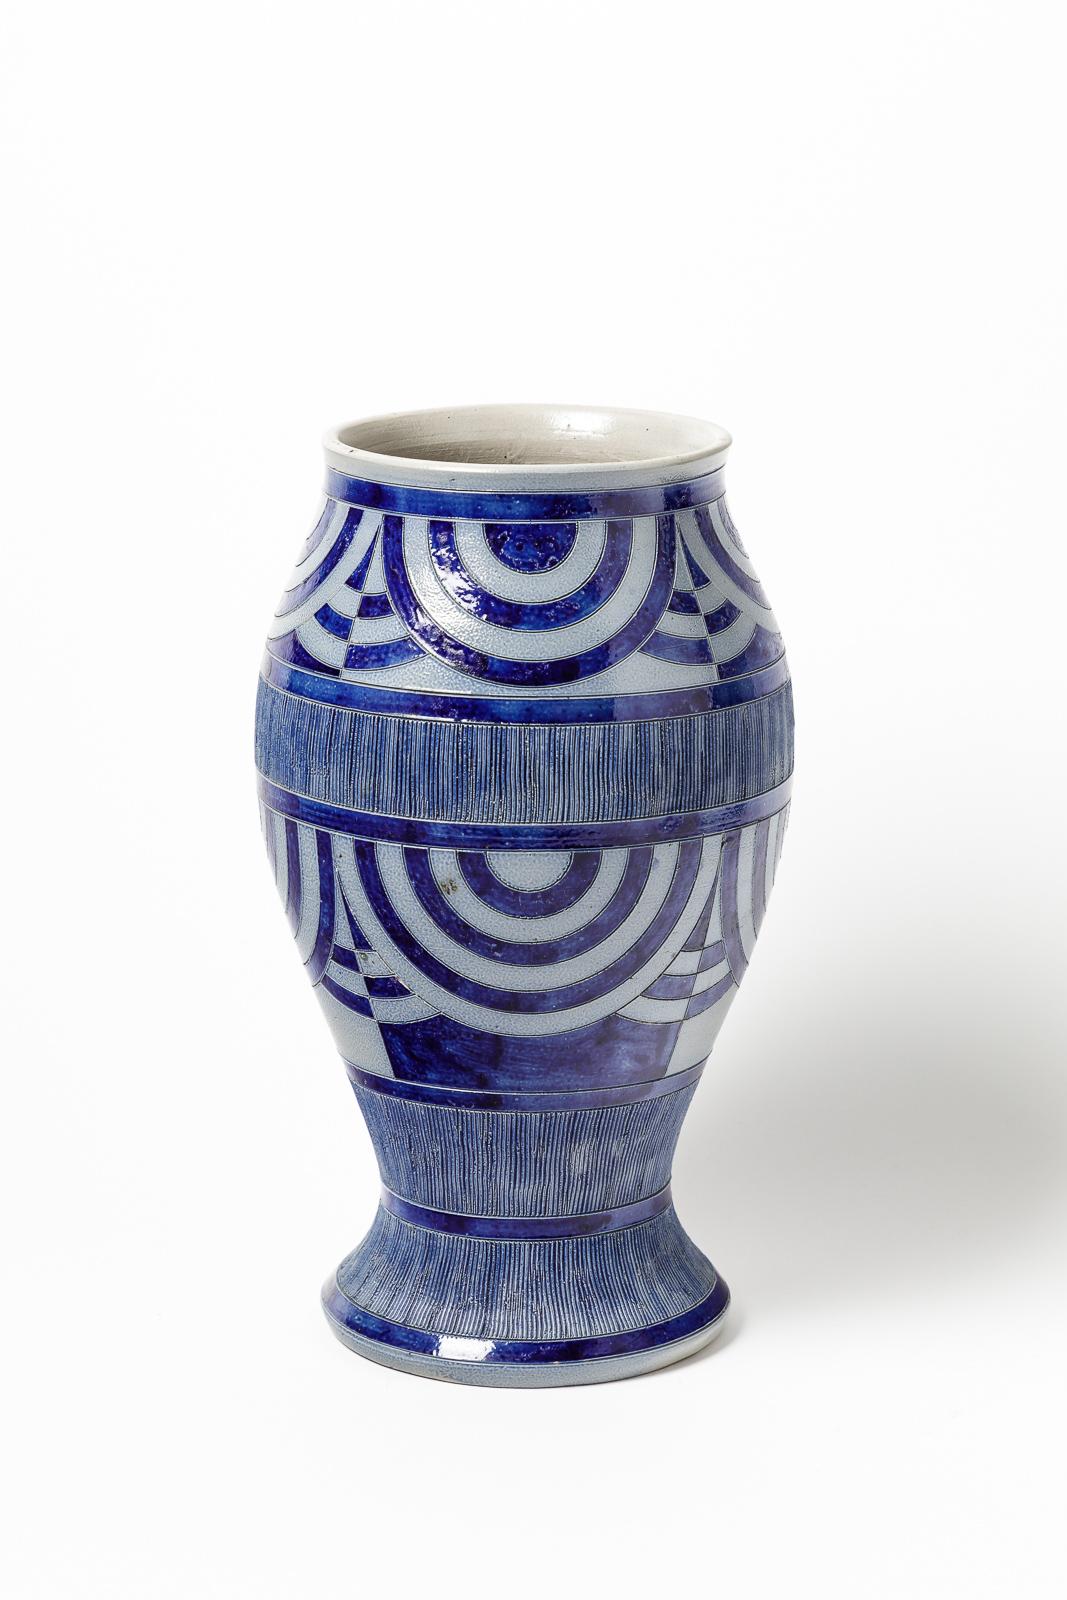 20th Century Art Deco Blue and Grey Abstract Ceramic Vase by Jos Kalb circa 1940 Pottery